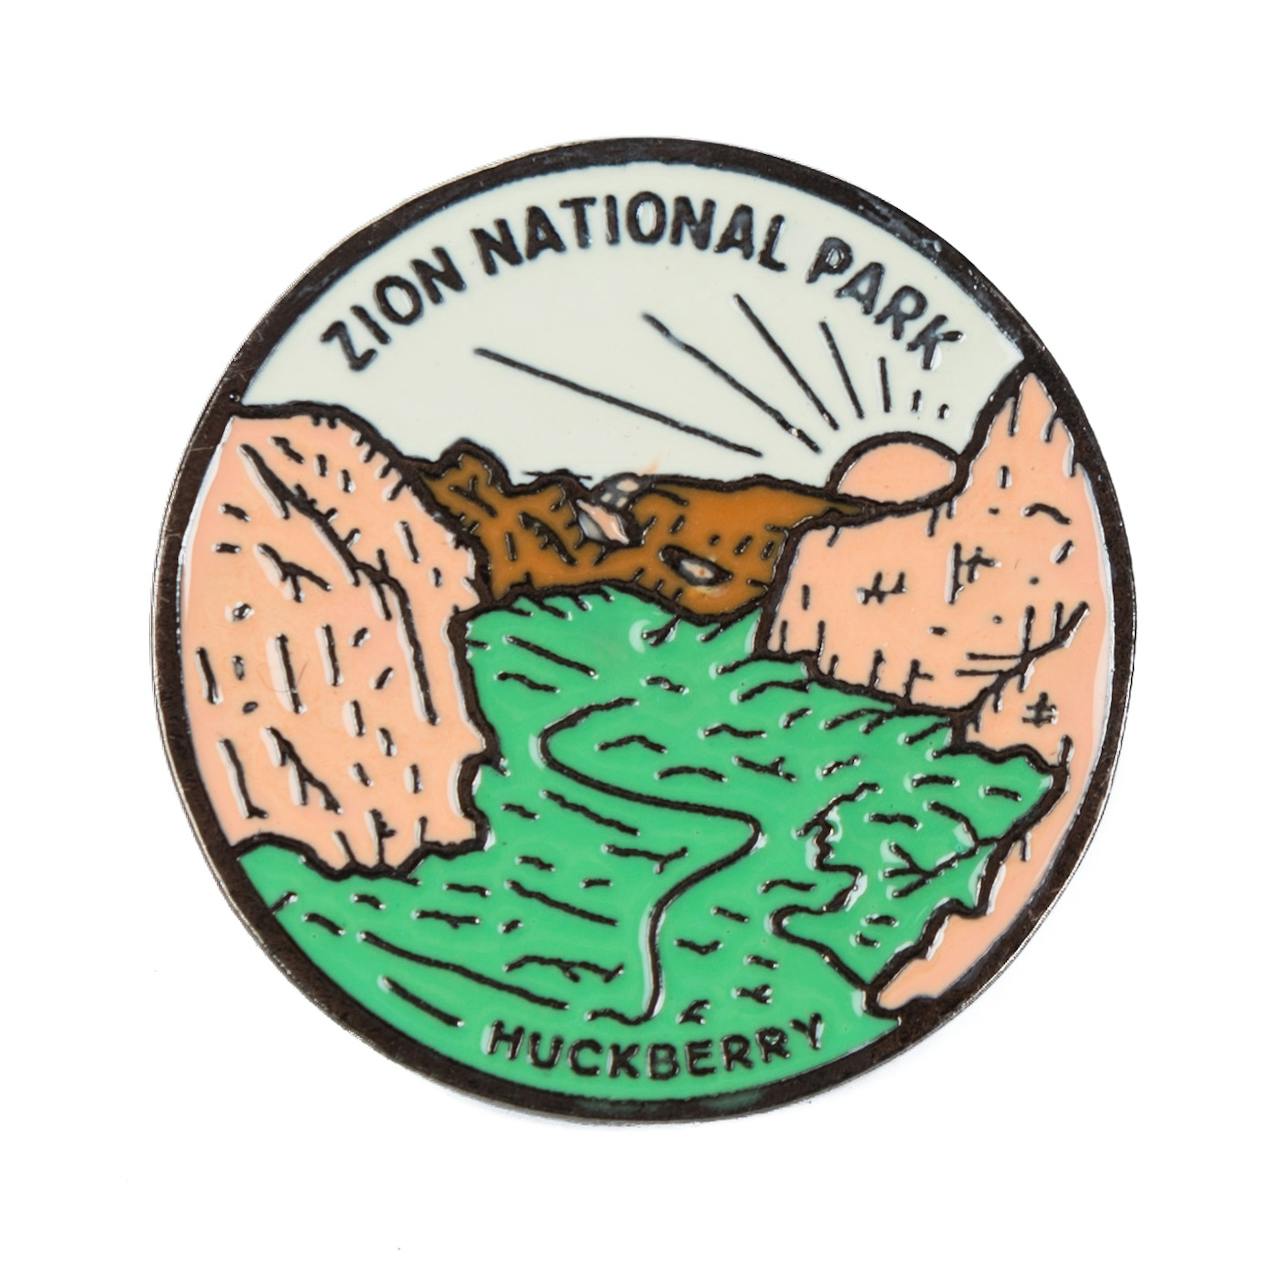 Huckberry Zion National Park Pin